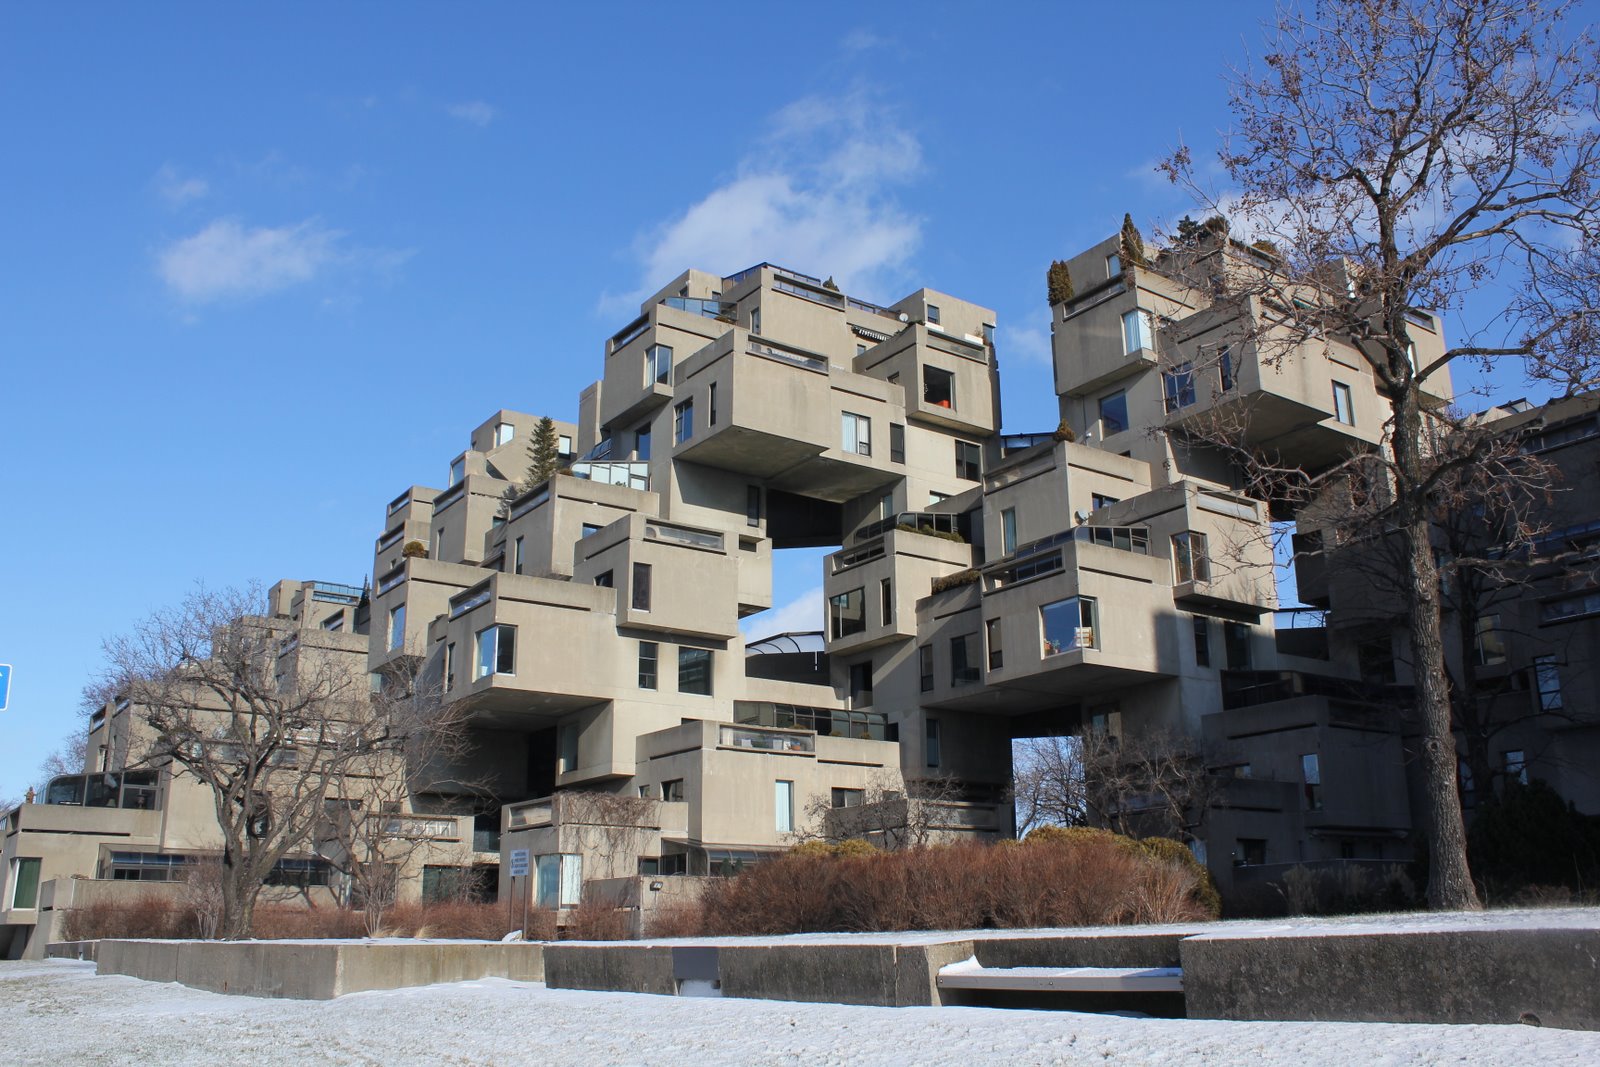 Not Dystopian Republic Habitat 67 By Moshe Safdie Pickle Deli Square